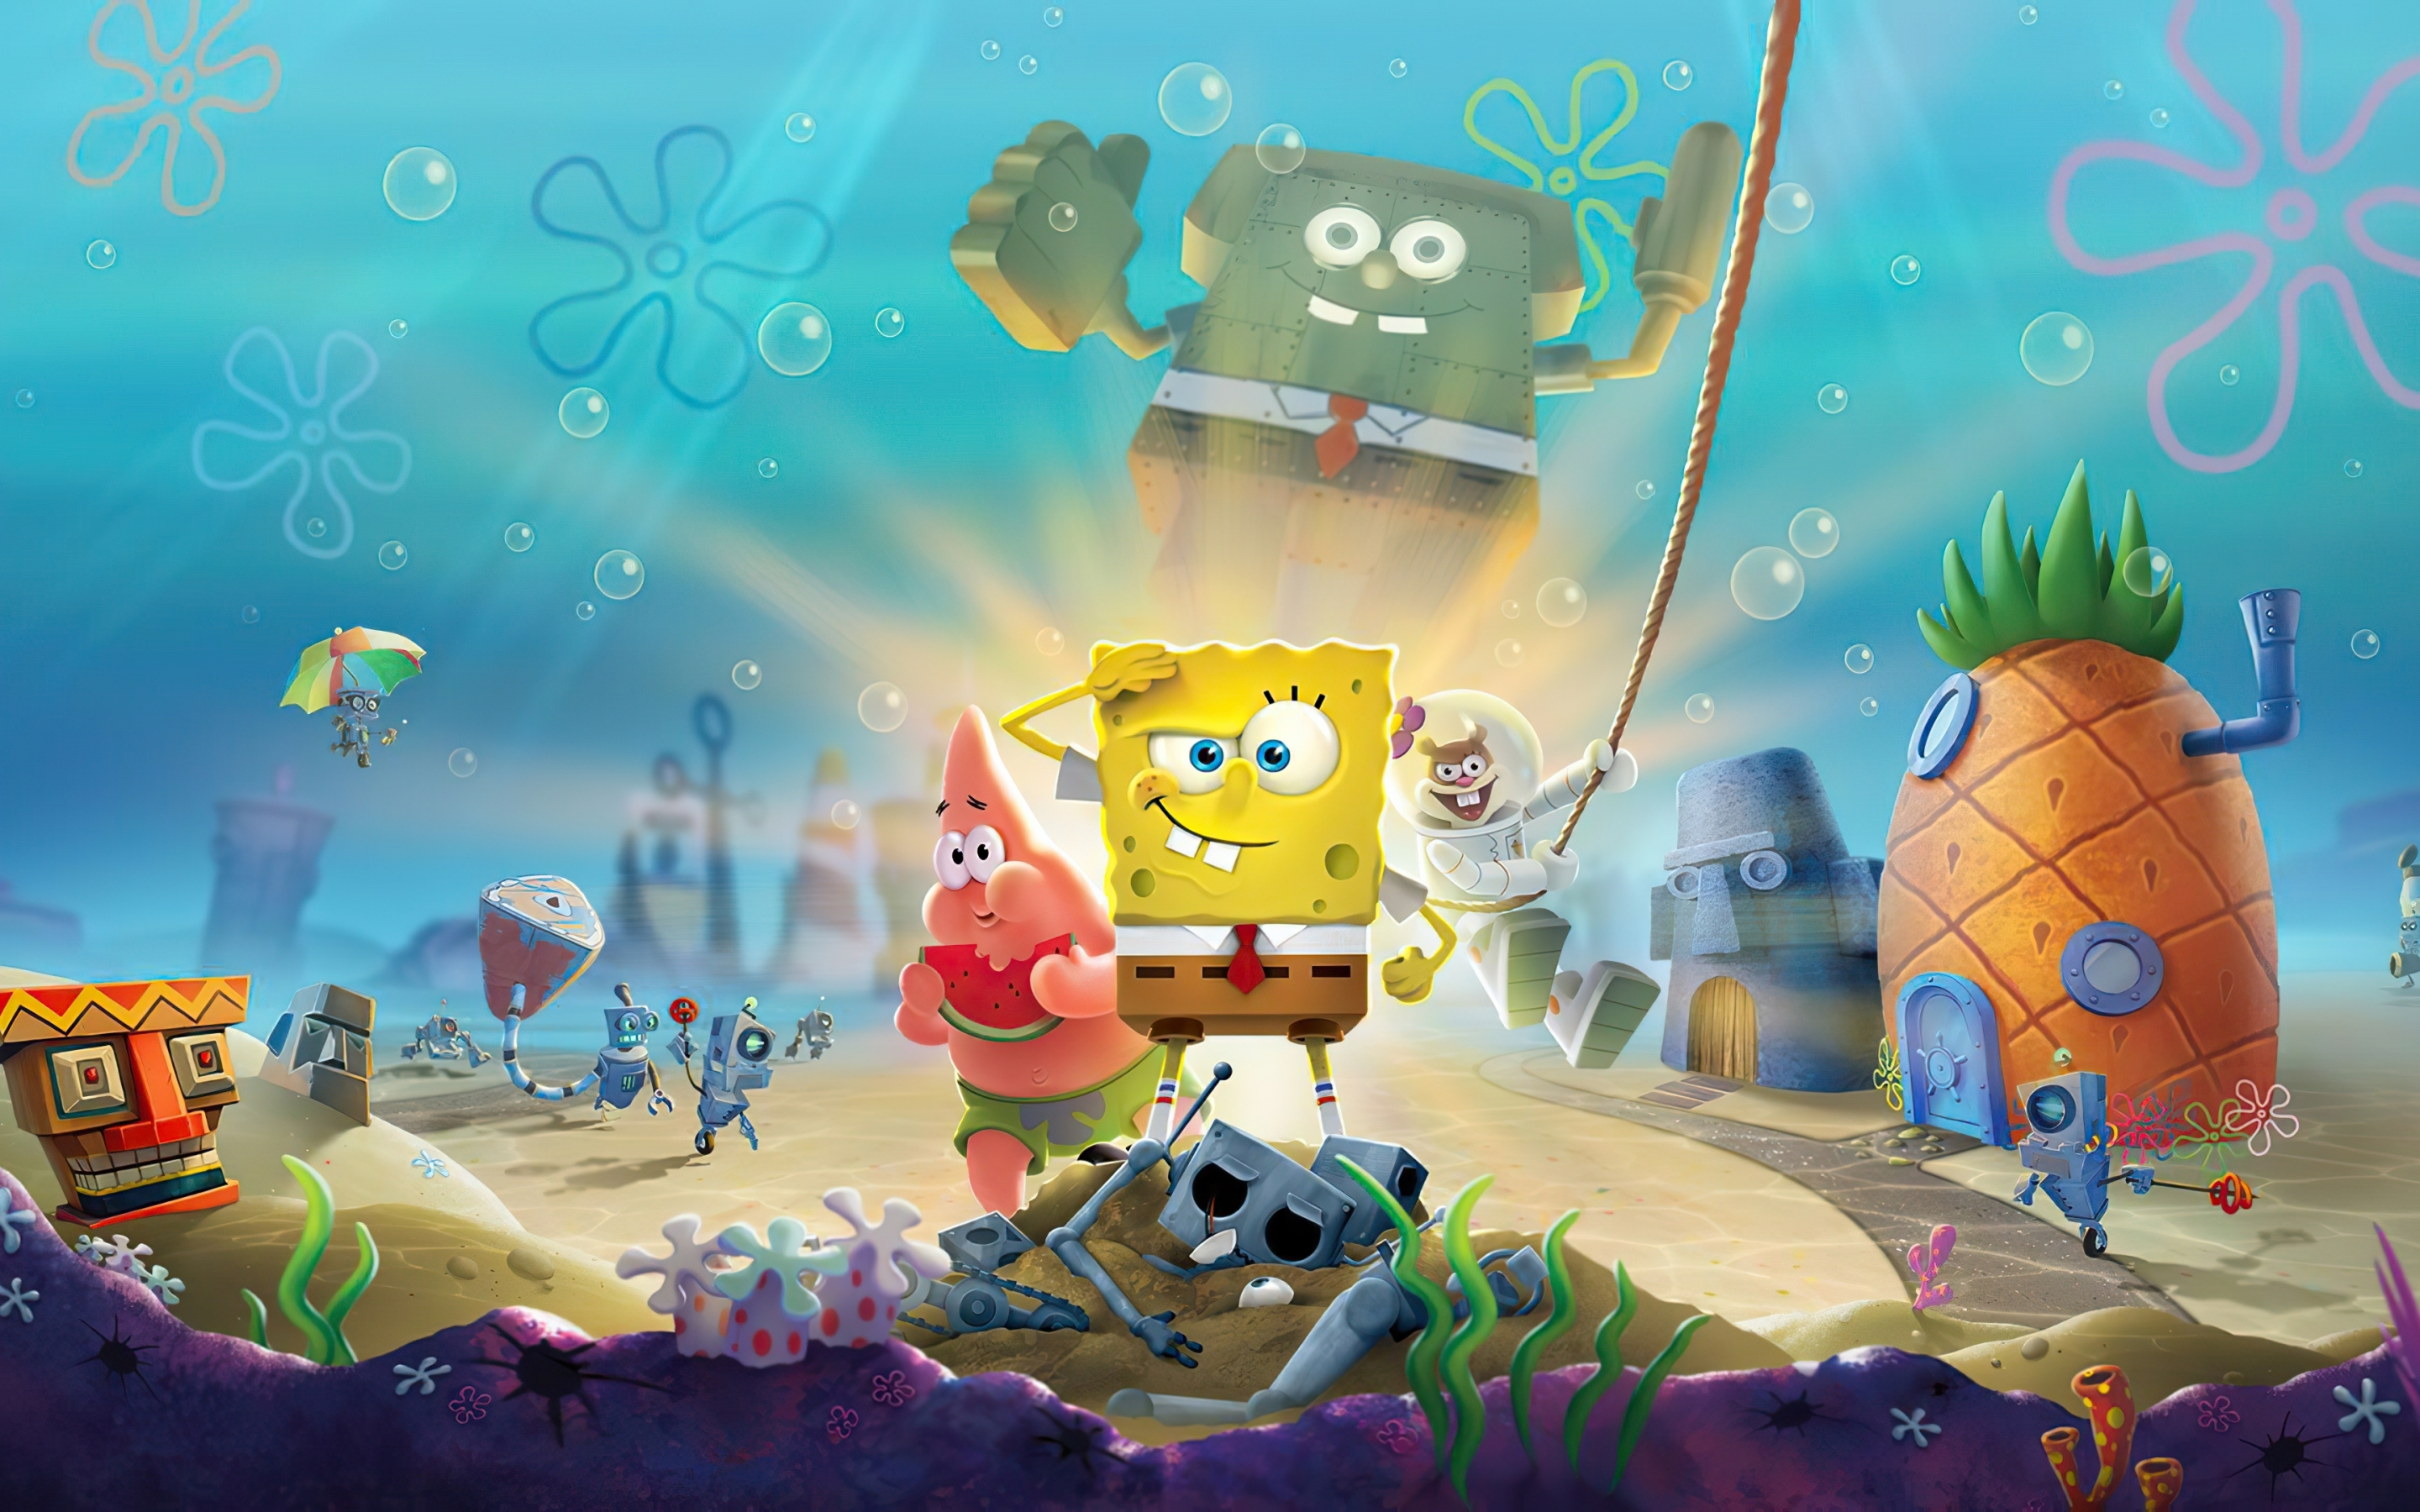 Download wallpaper 2880x1800 spongebob squarepants, underwater, cartoon, mac  pro retaia 2880x1800 hd background, 25111